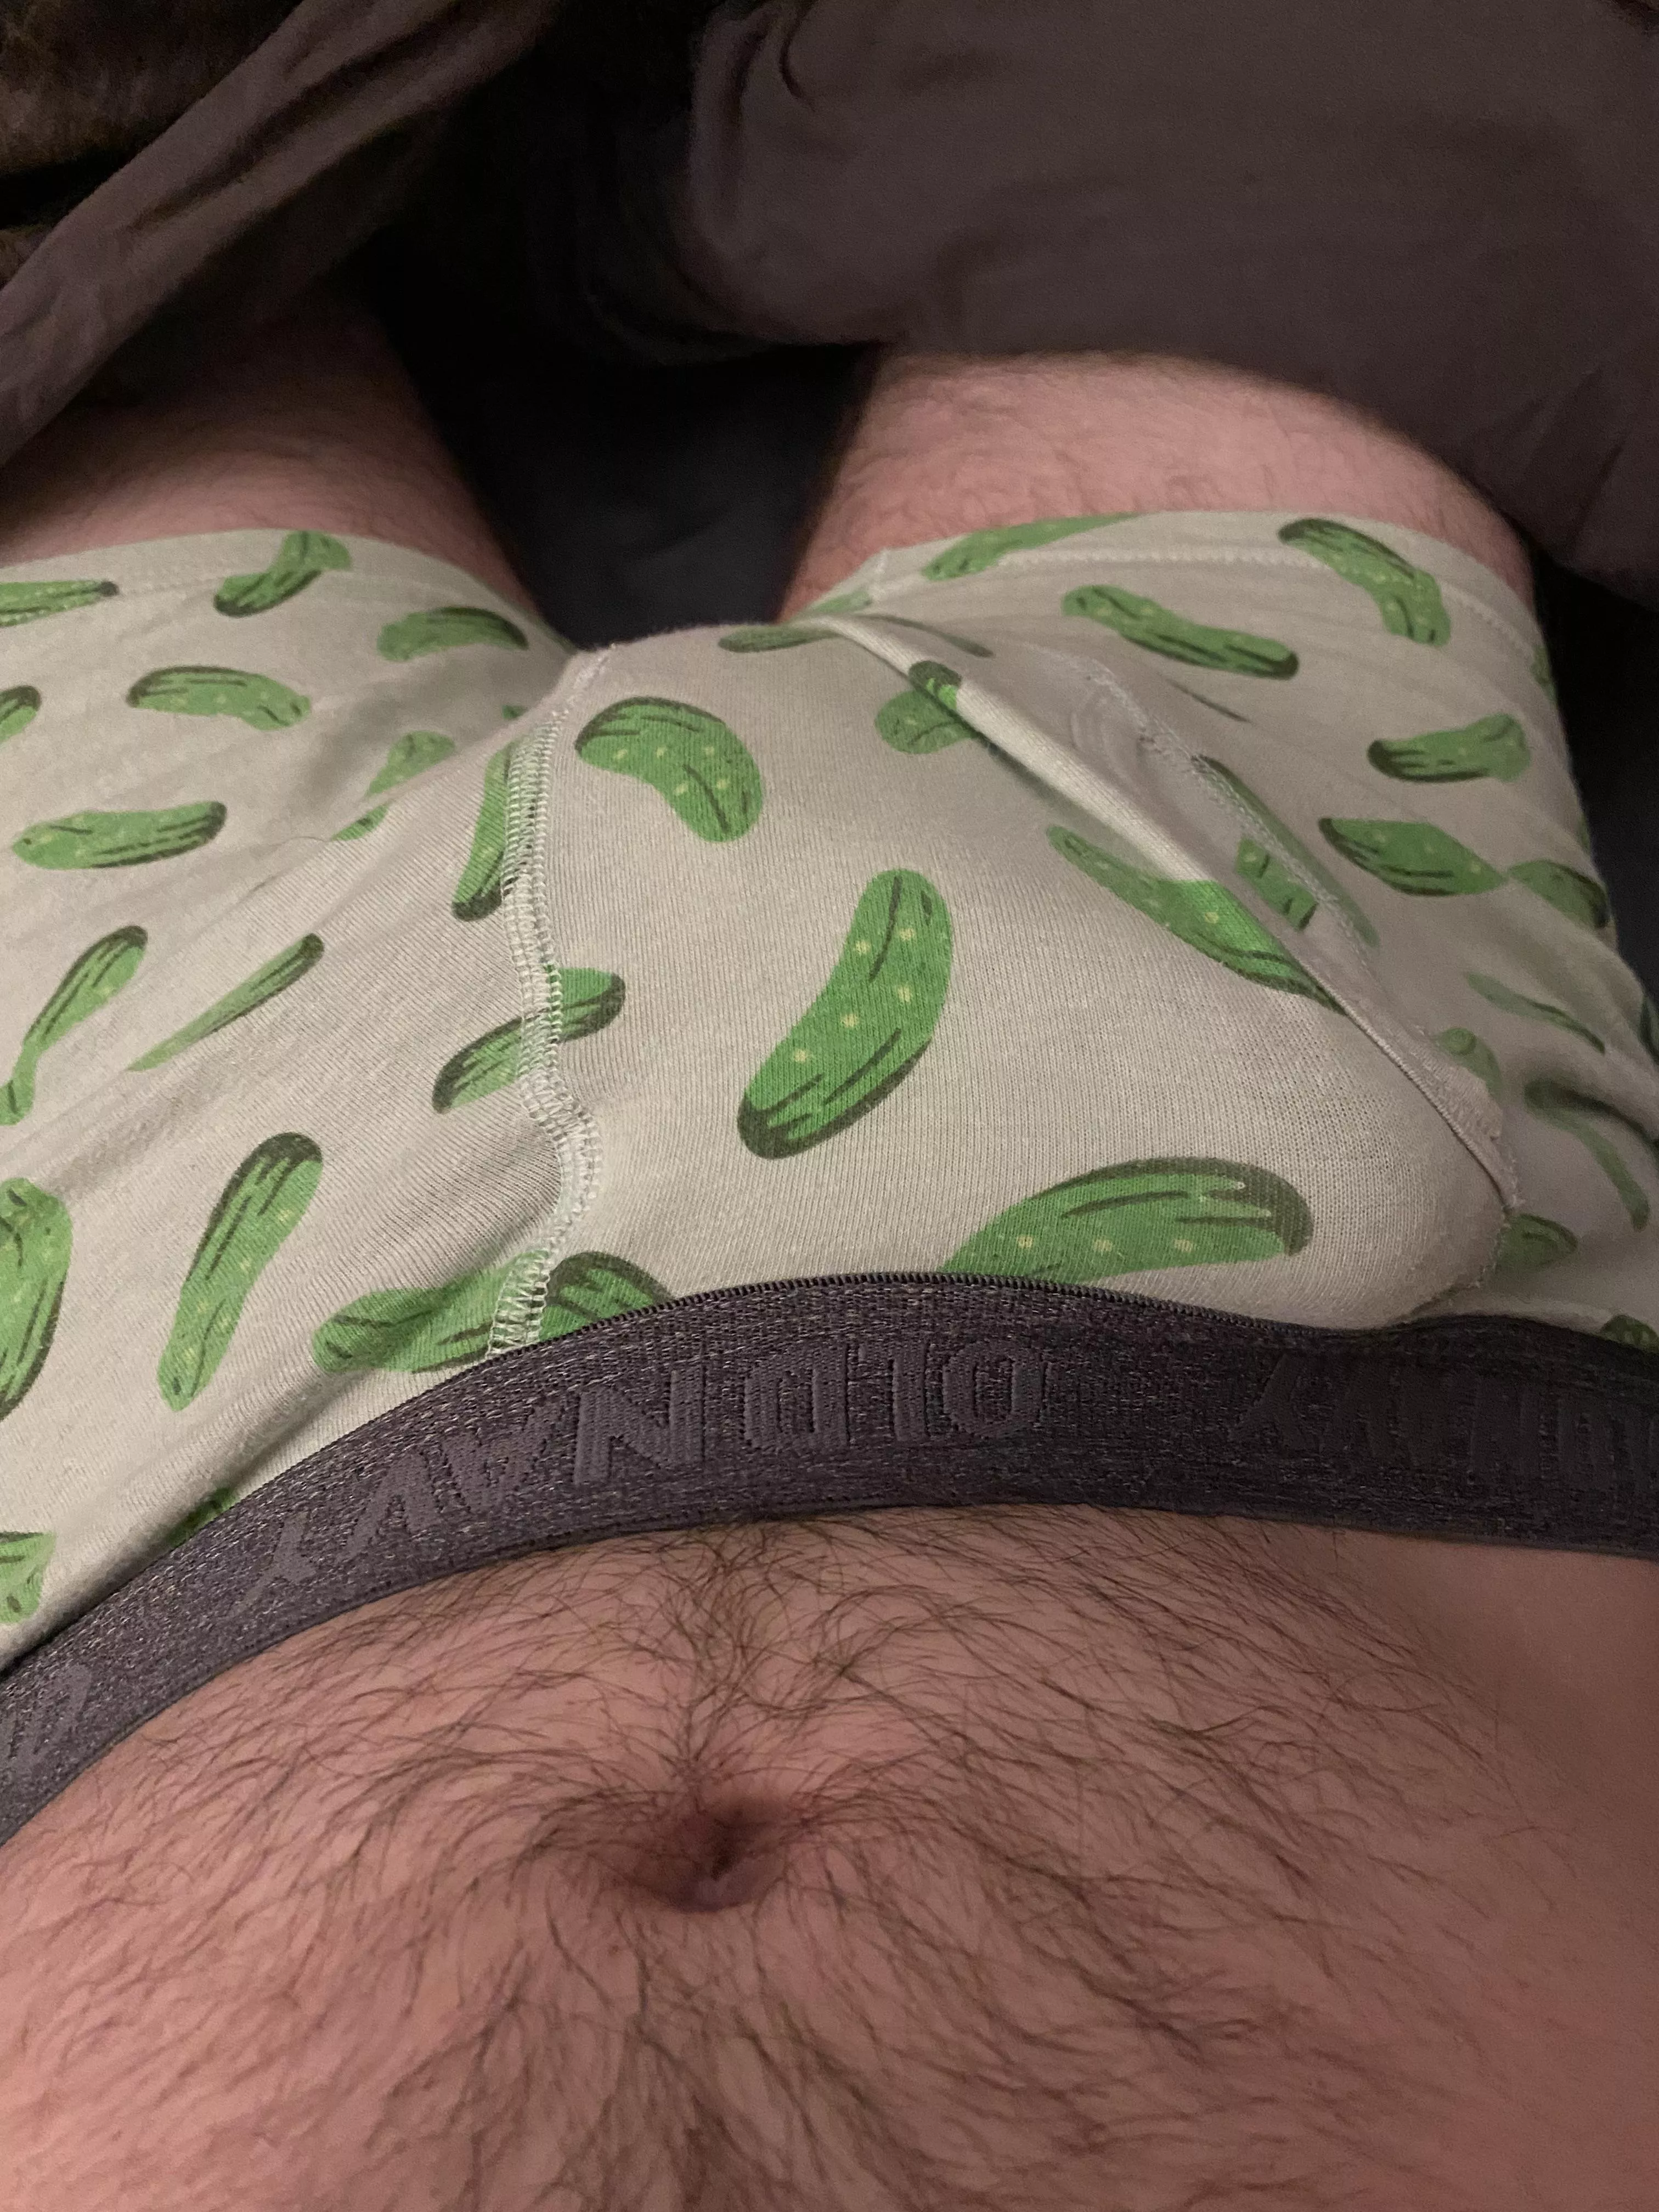 Pickles nude